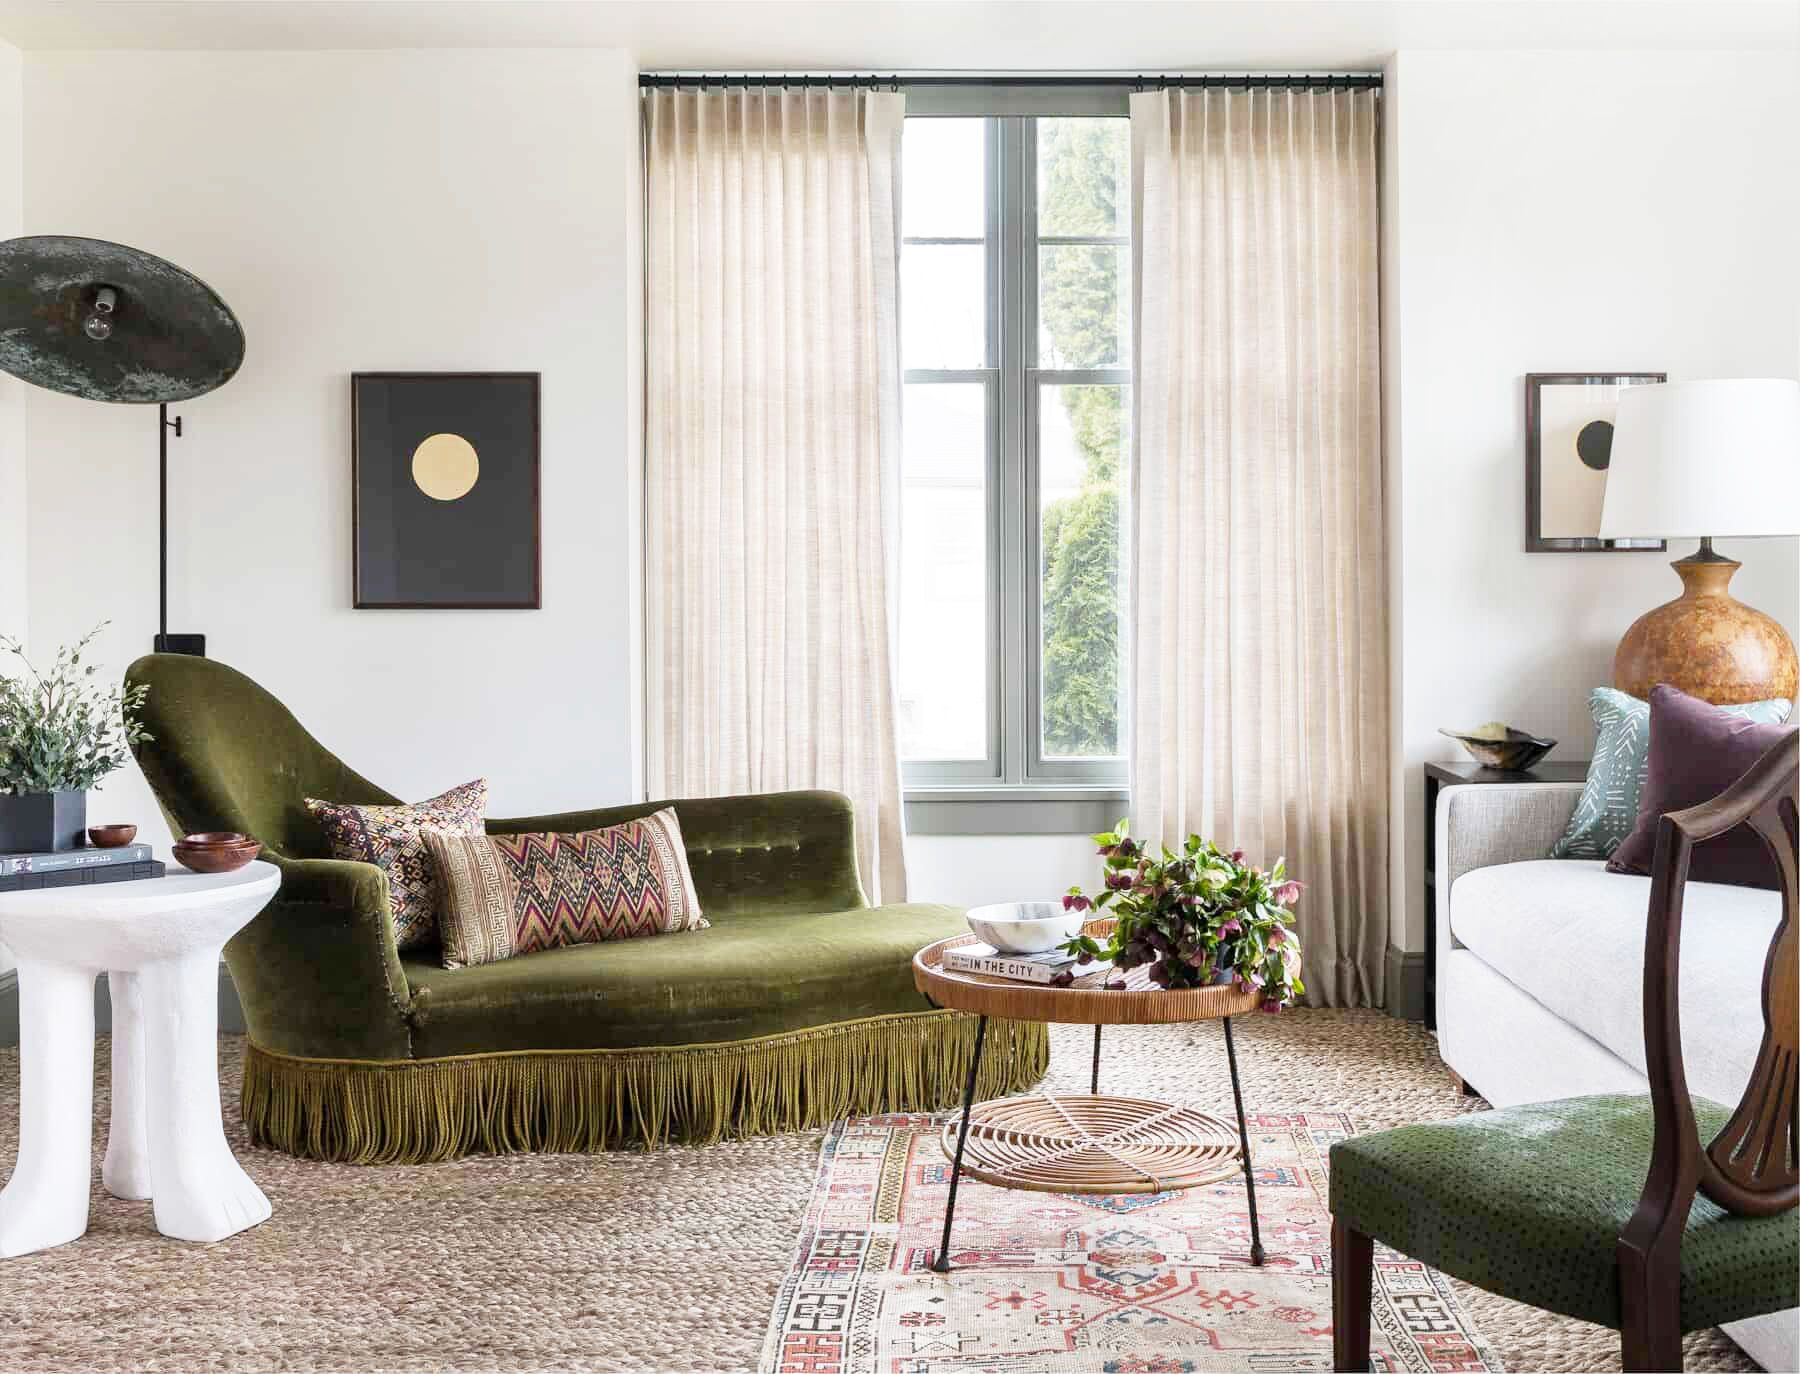 15 Stylish Living Room Lighting Ideas, Living Room Chandeliers Ideas